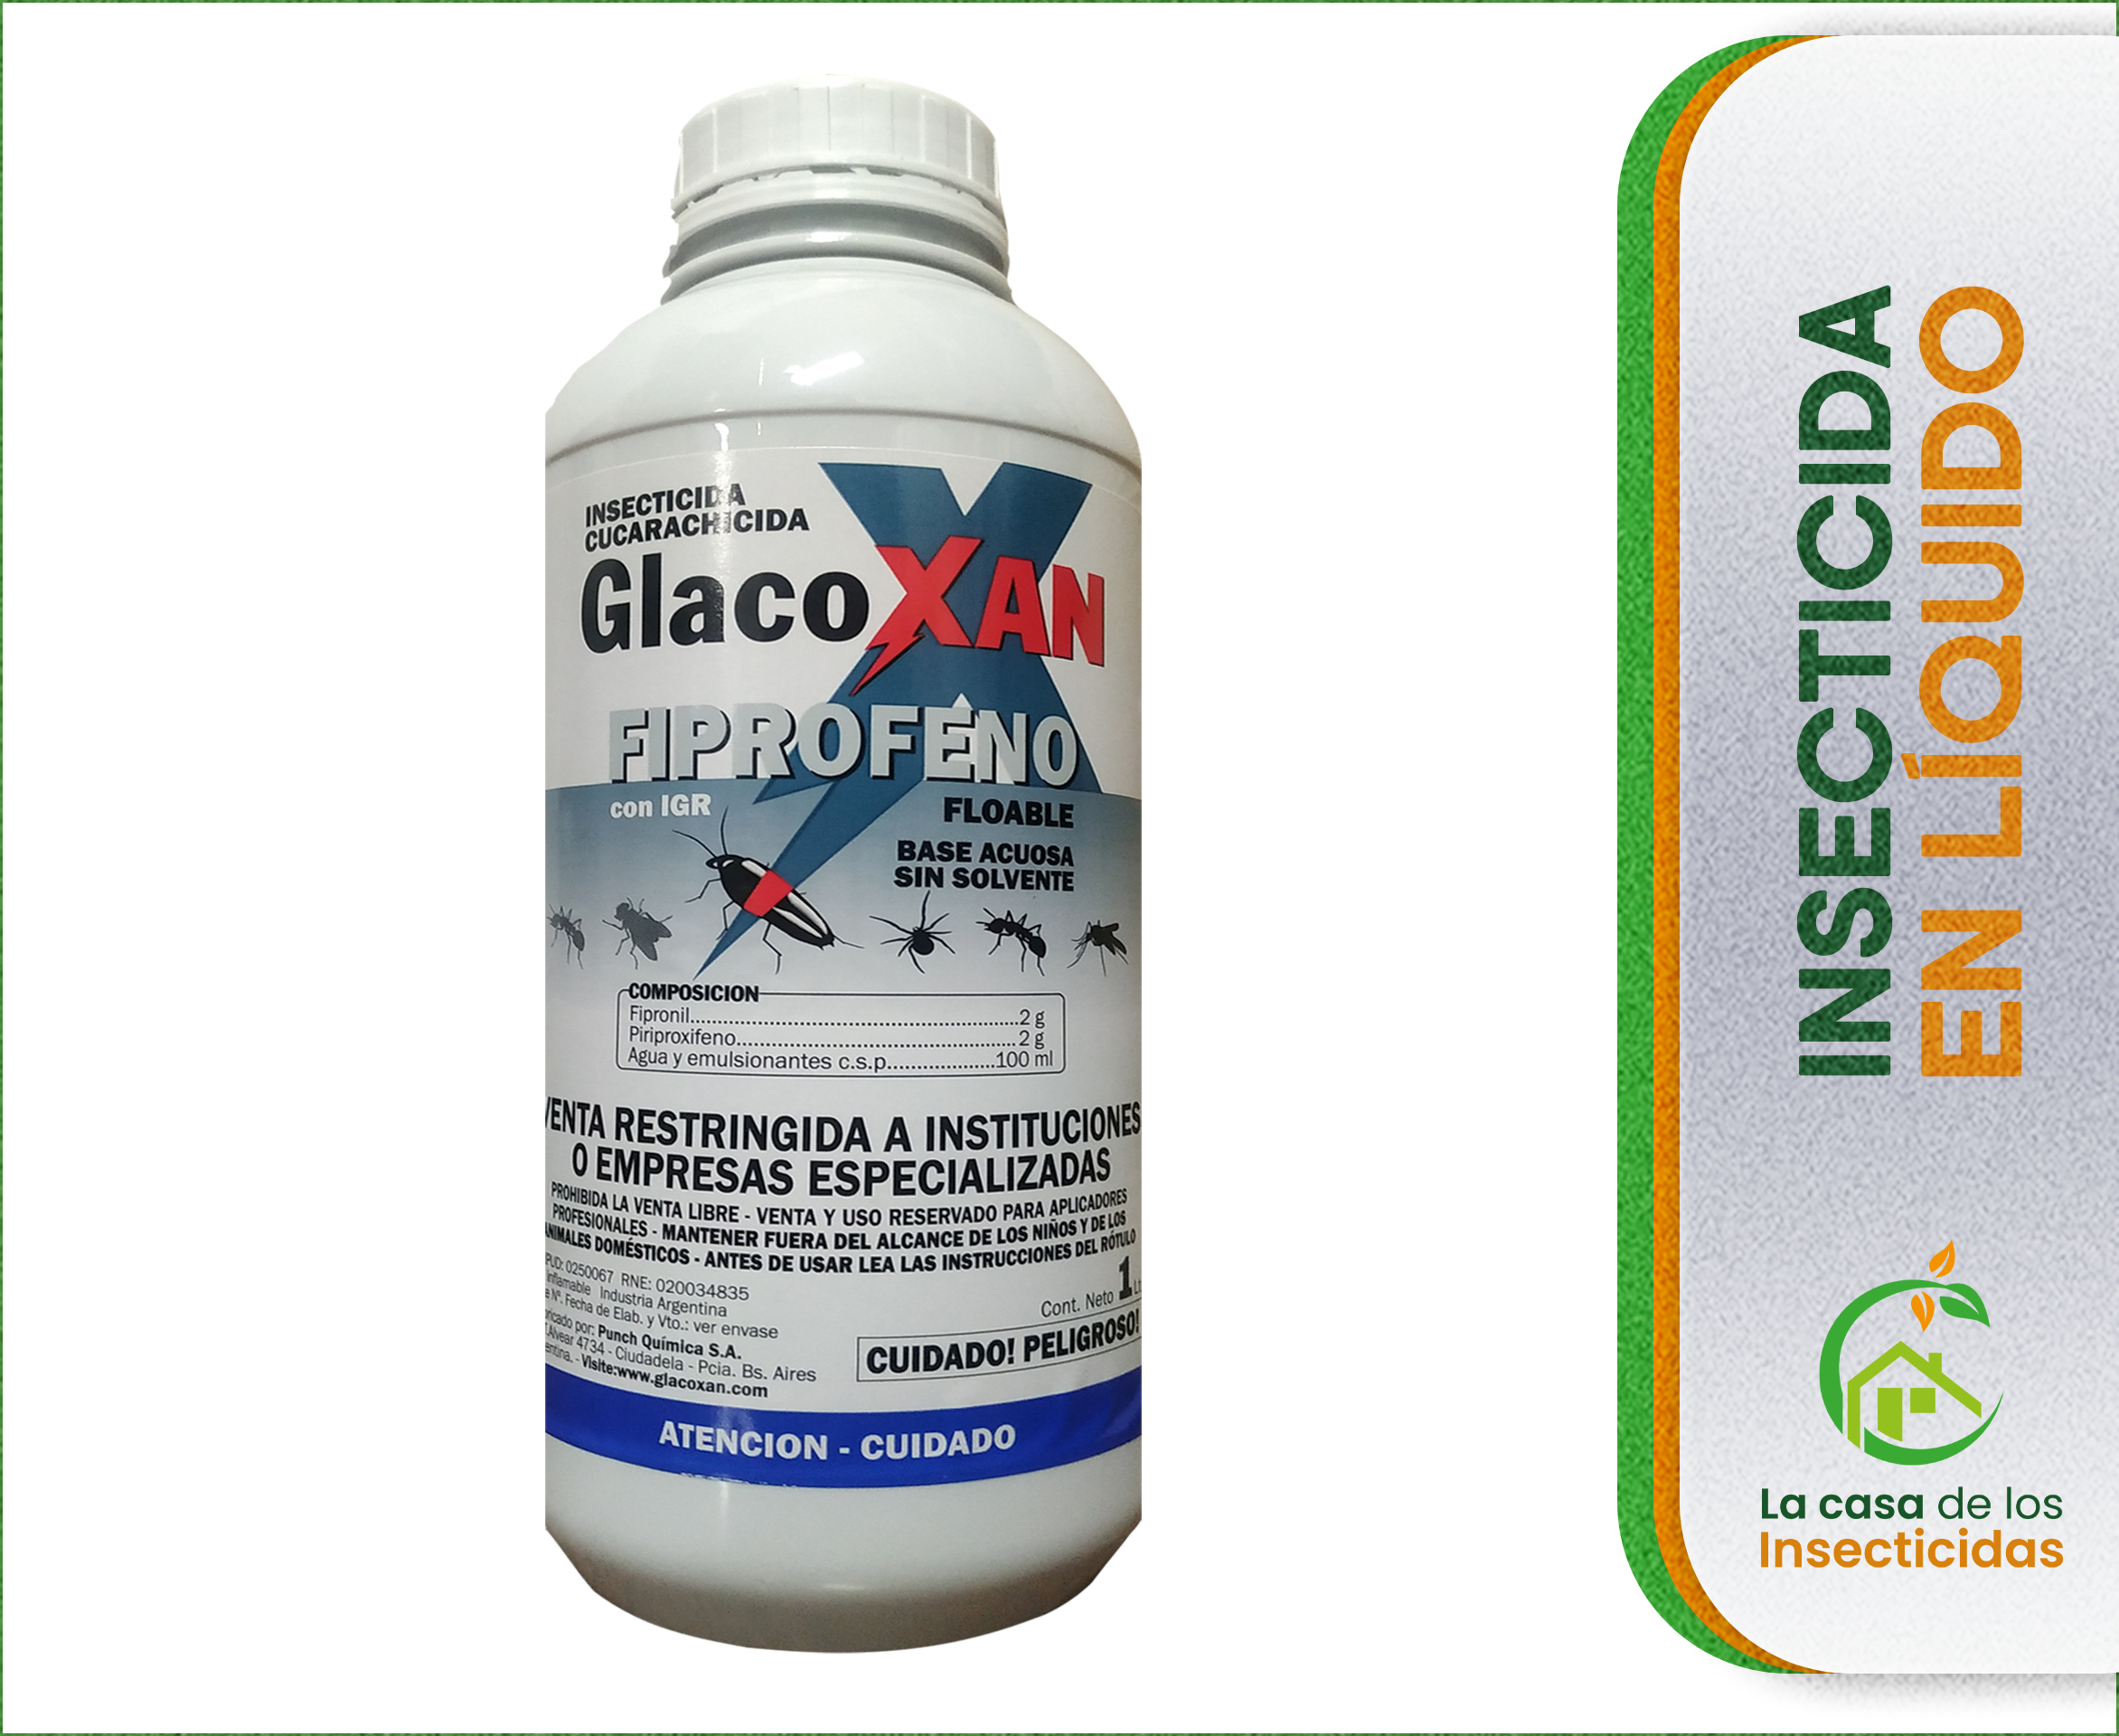 Glacoxan Fiprofeno x 1L